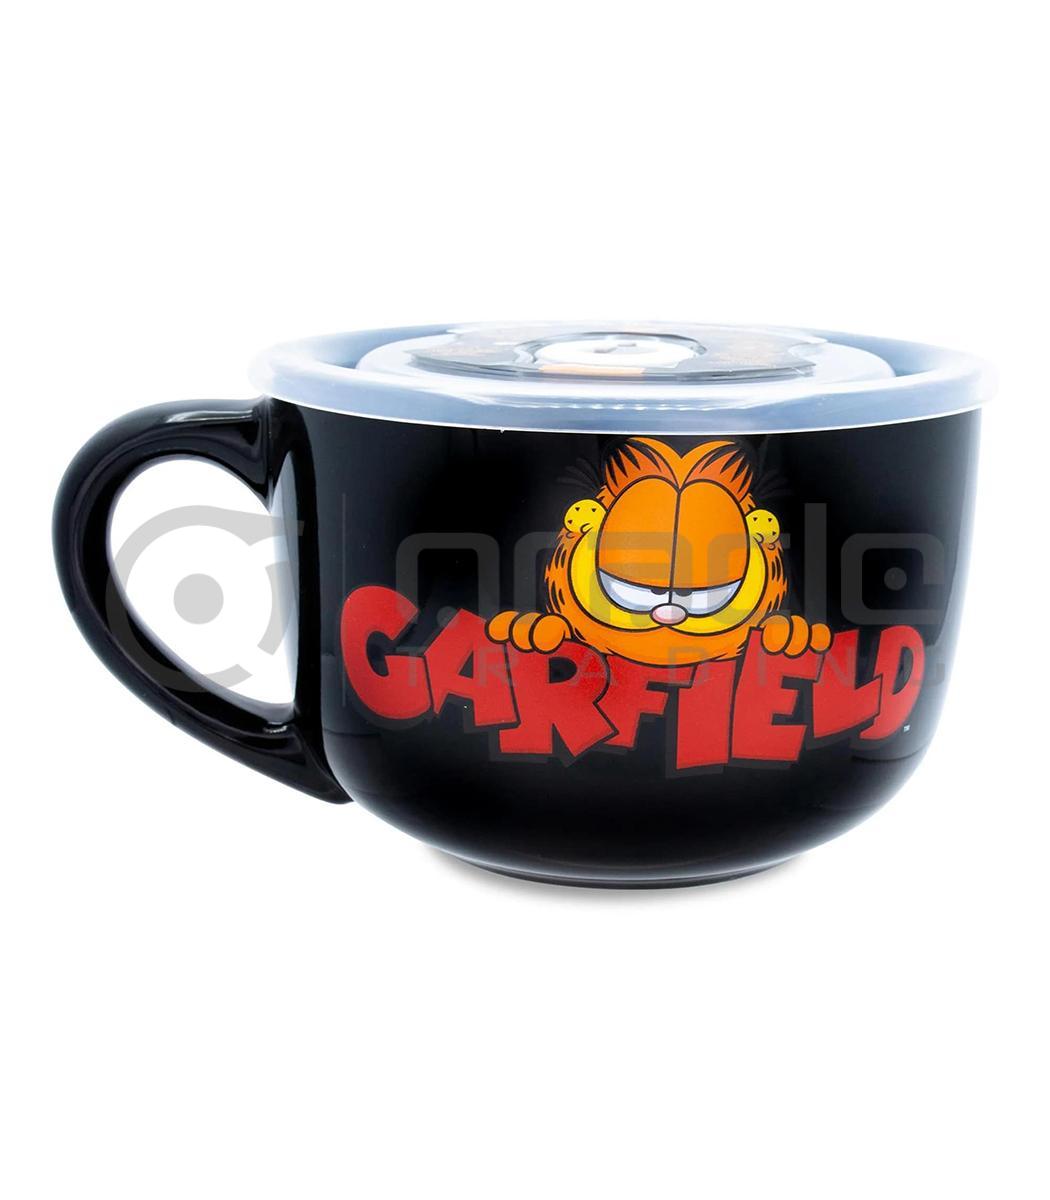 Garfield Vented Soup Mug